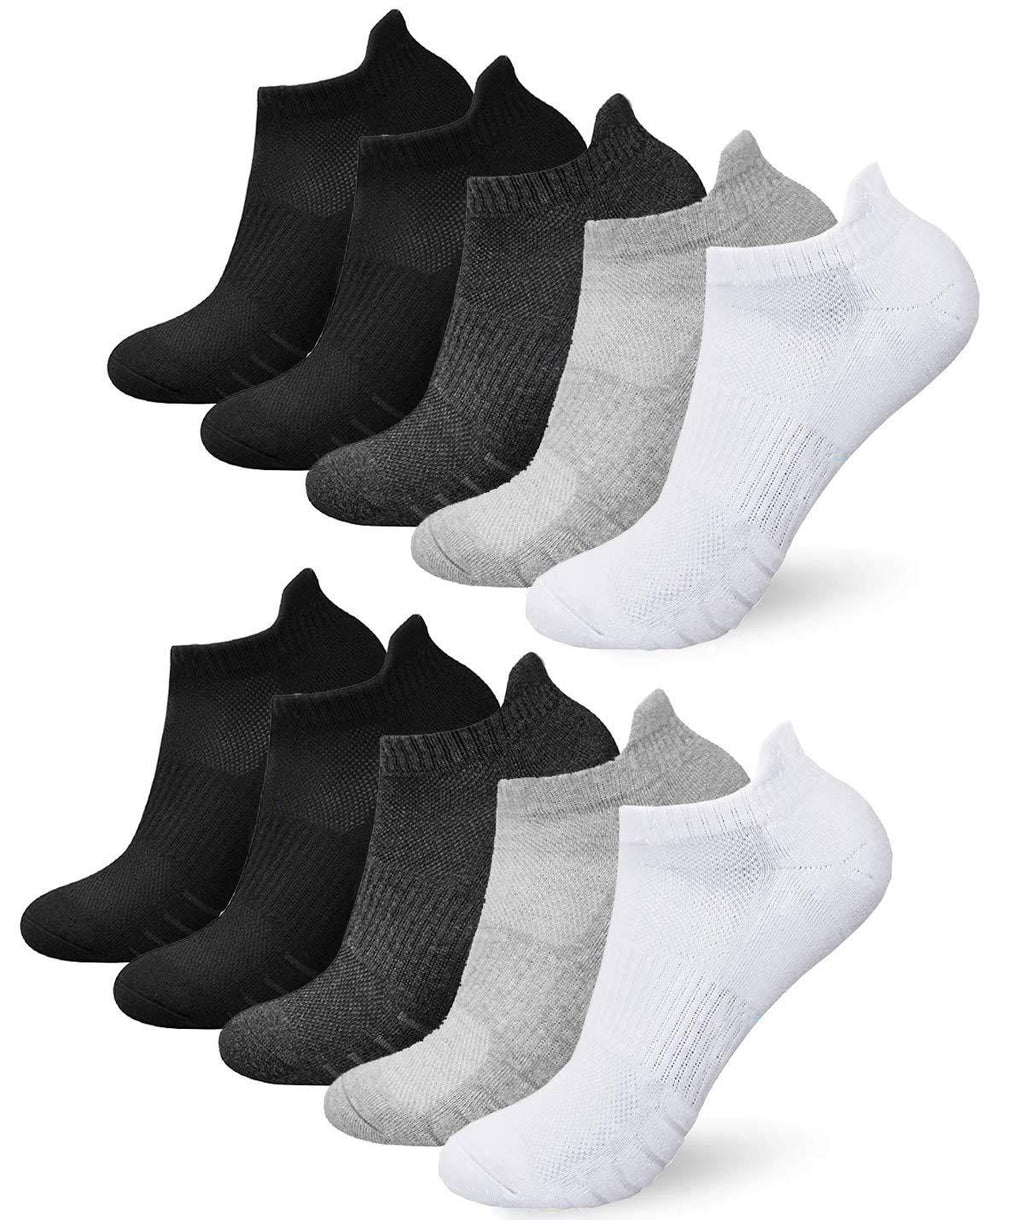 [Australia] - BUDERMMY Sports Socks - Cushioned Running Socks Trainer Socks Cotton Ankle Socks for Men Women, 5 Pairs Low Cut Athletic Walking Socks ,Anti-Blister Mixed Color 5 Pairs 6-8 